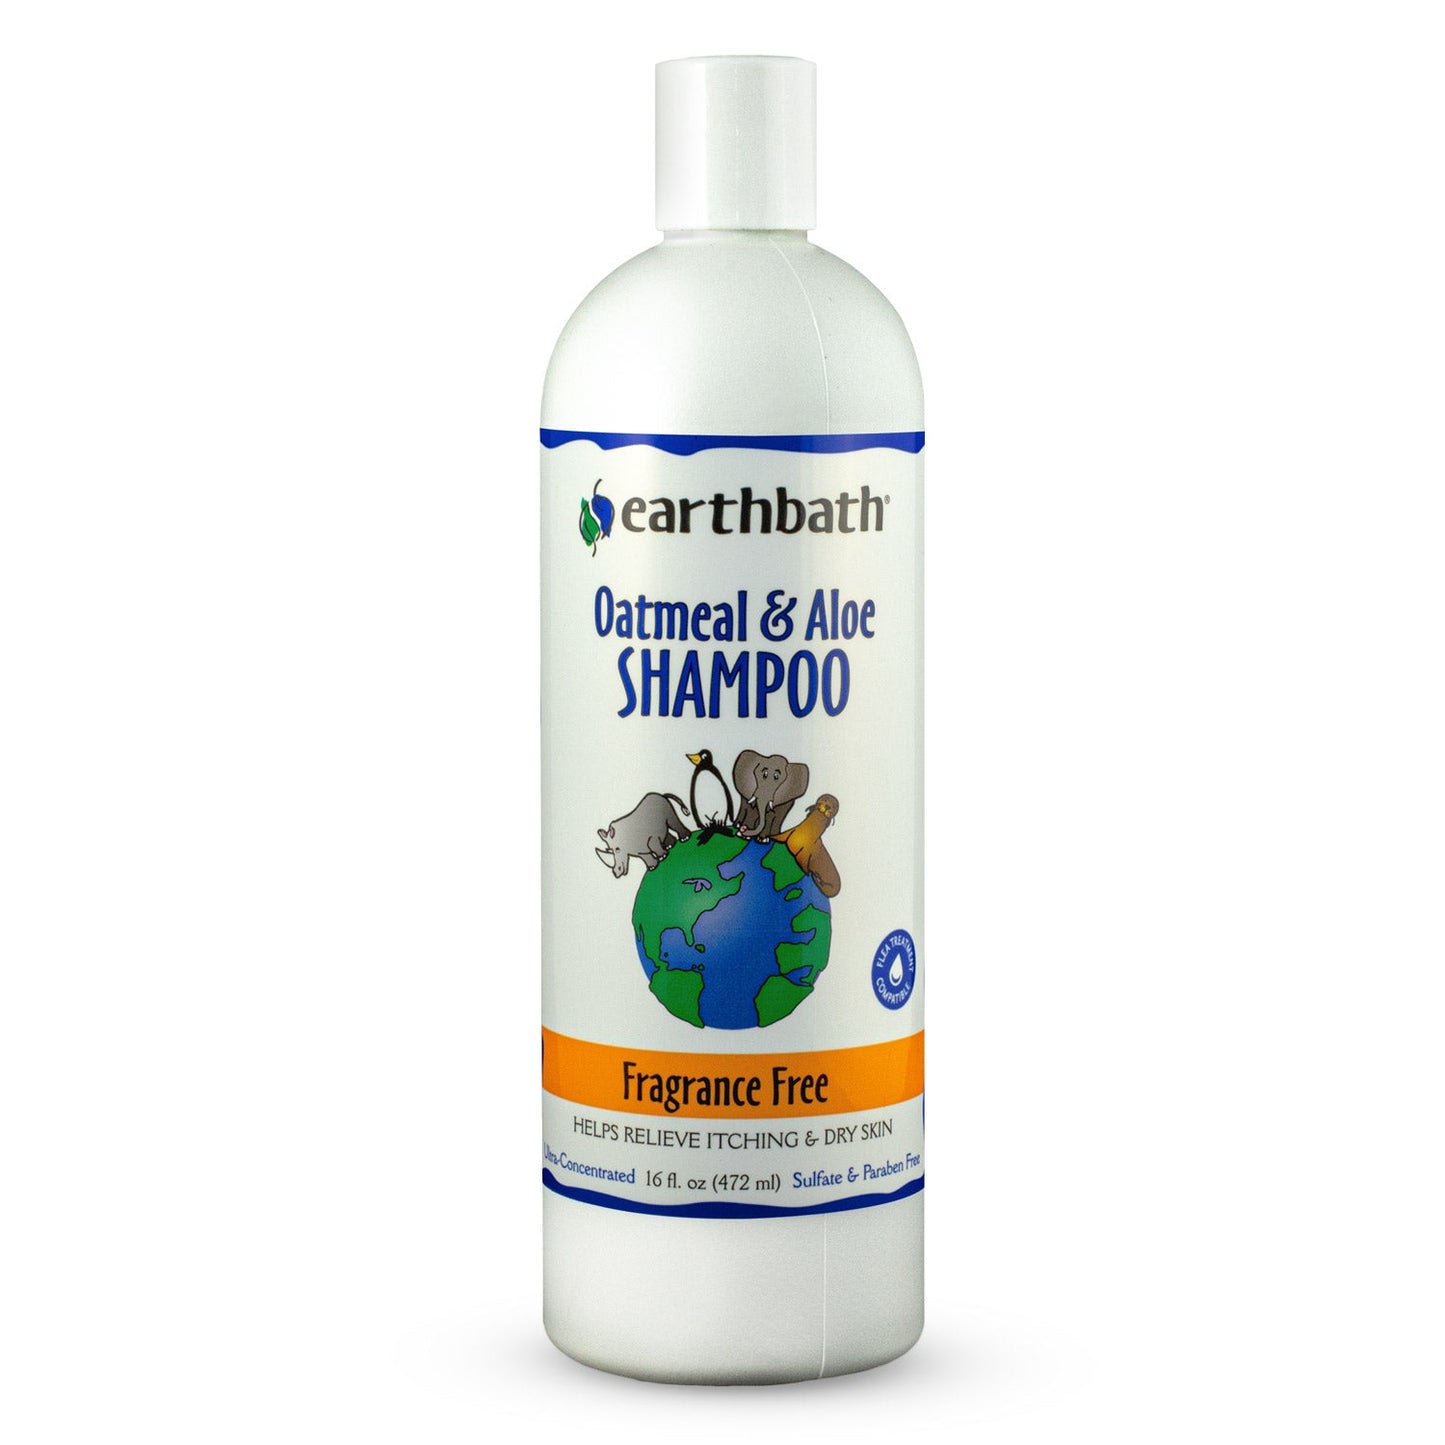 earthbath® Oatmeal & Aloe Shampoo, Fragrance Free, Helps Relieve Itchy Dry Skin